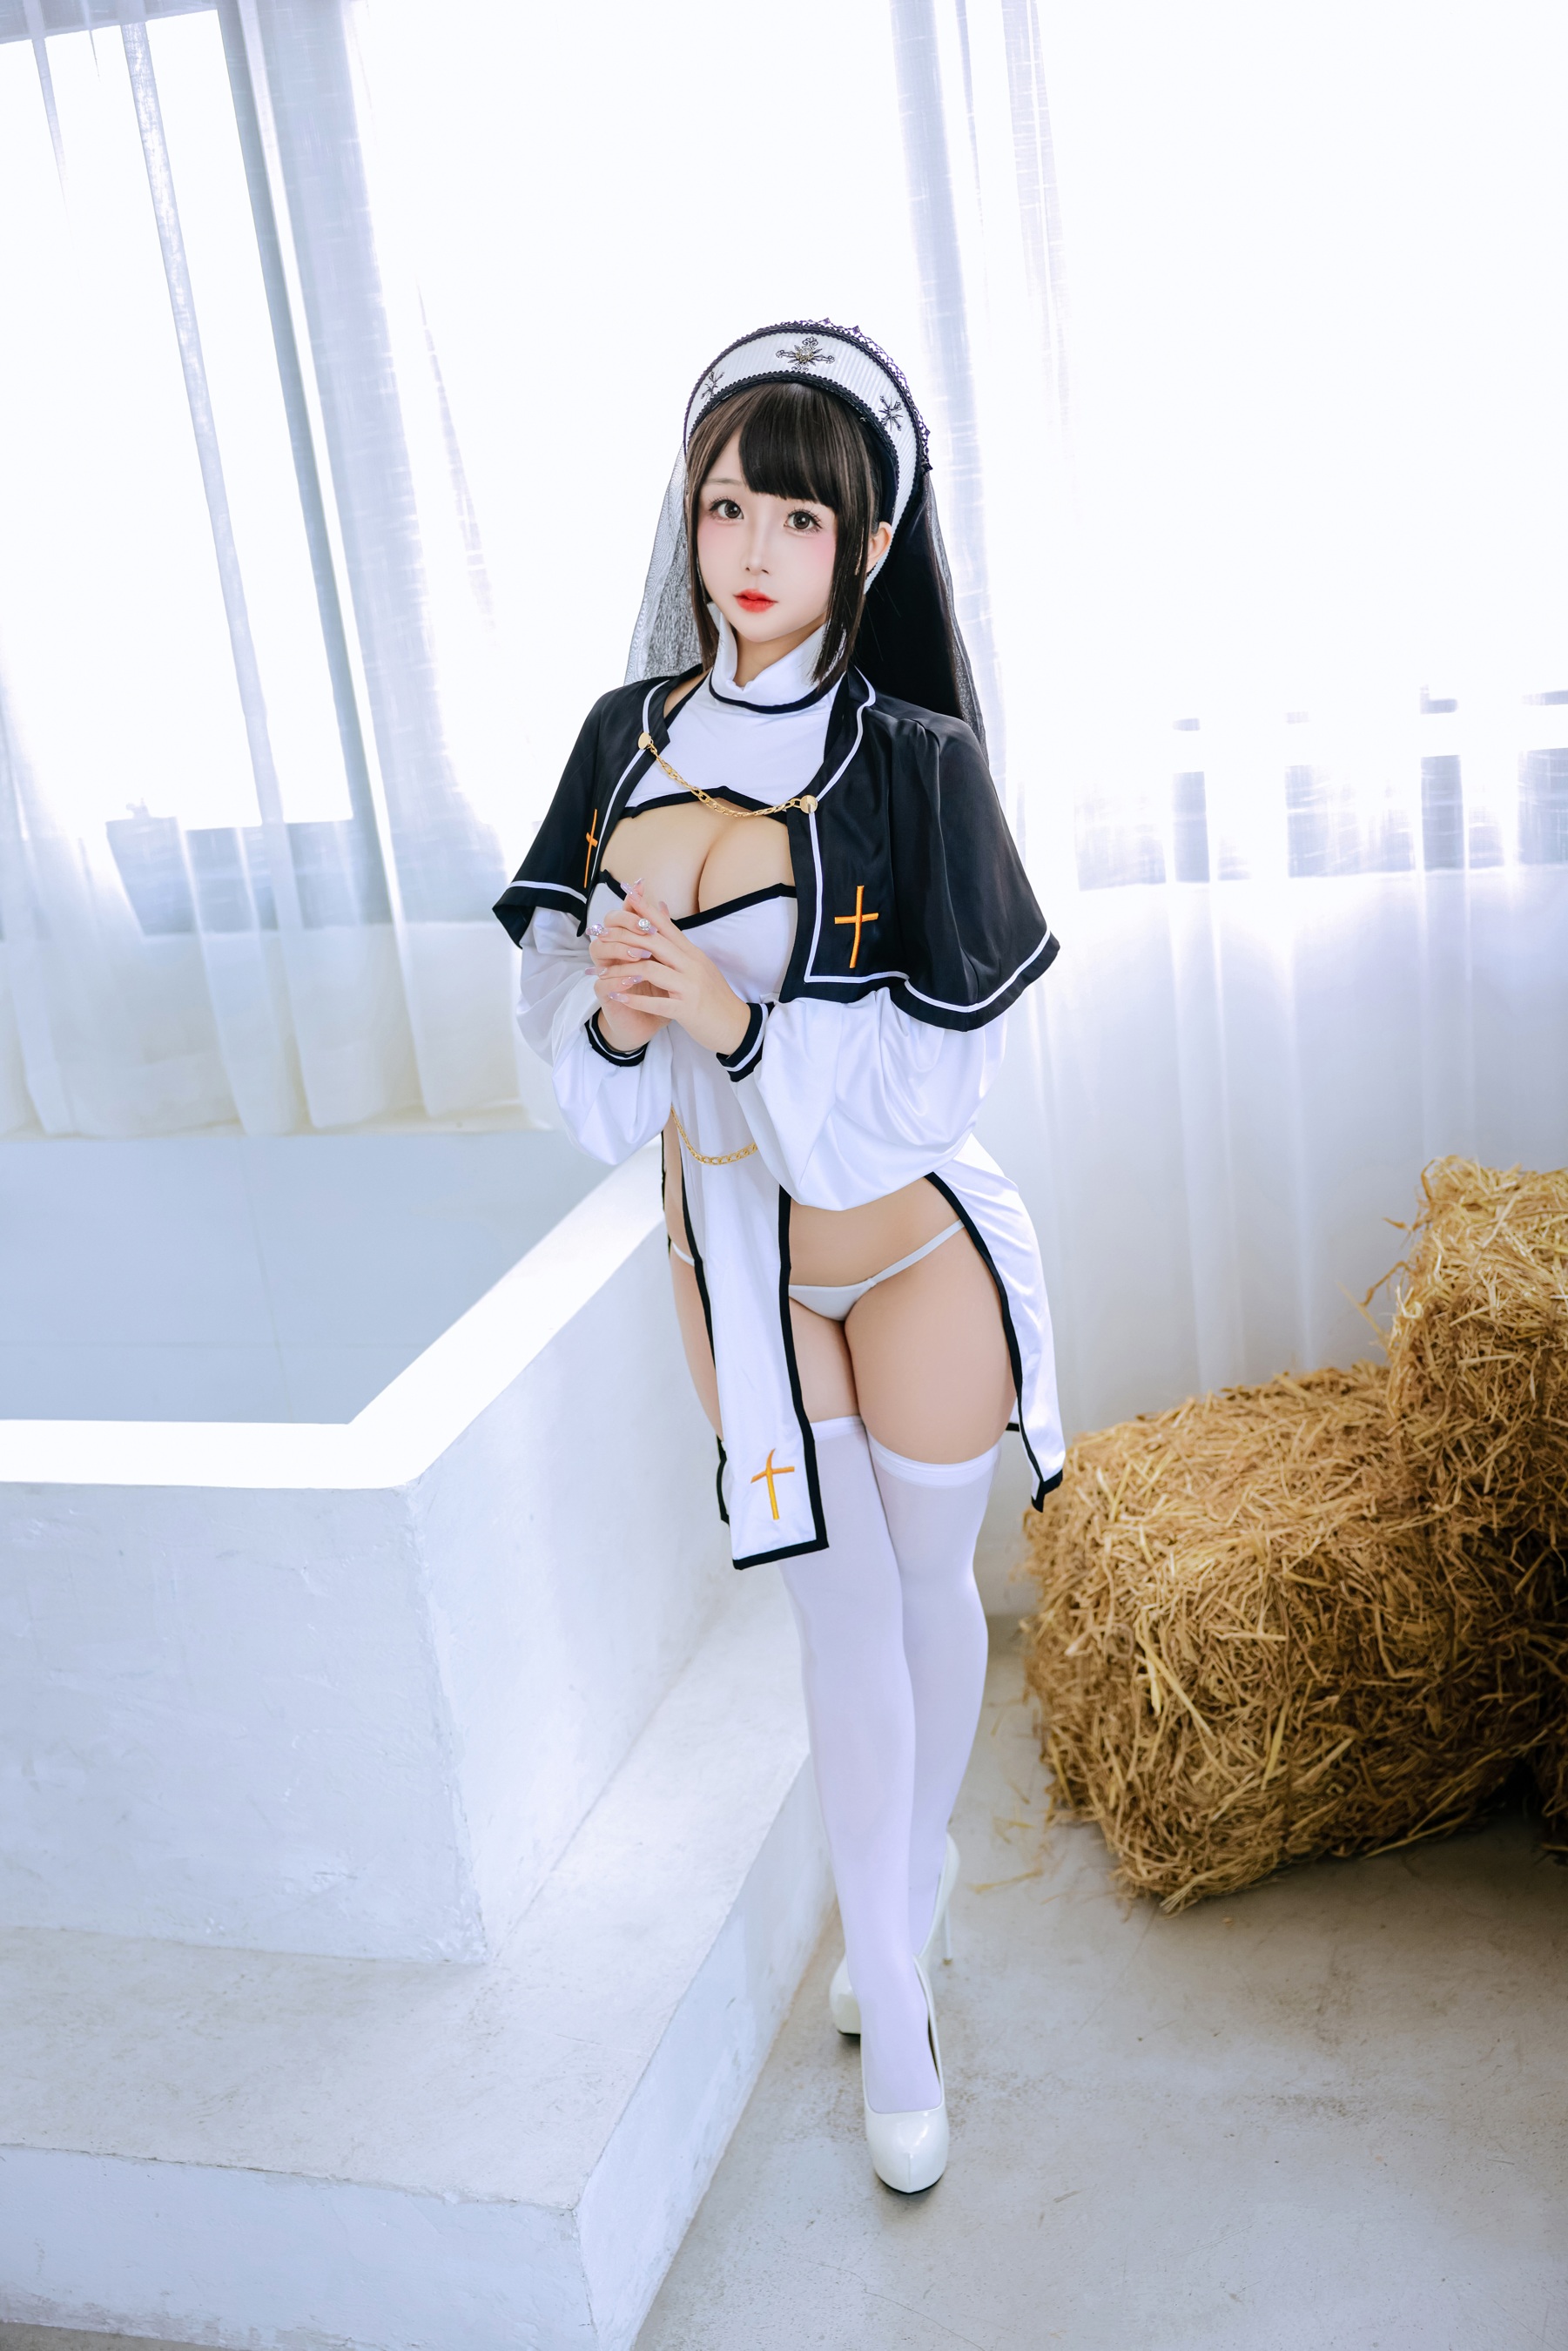 People 1801x2700 Rina Jiao model women cosplay nun outfit Asian stockings